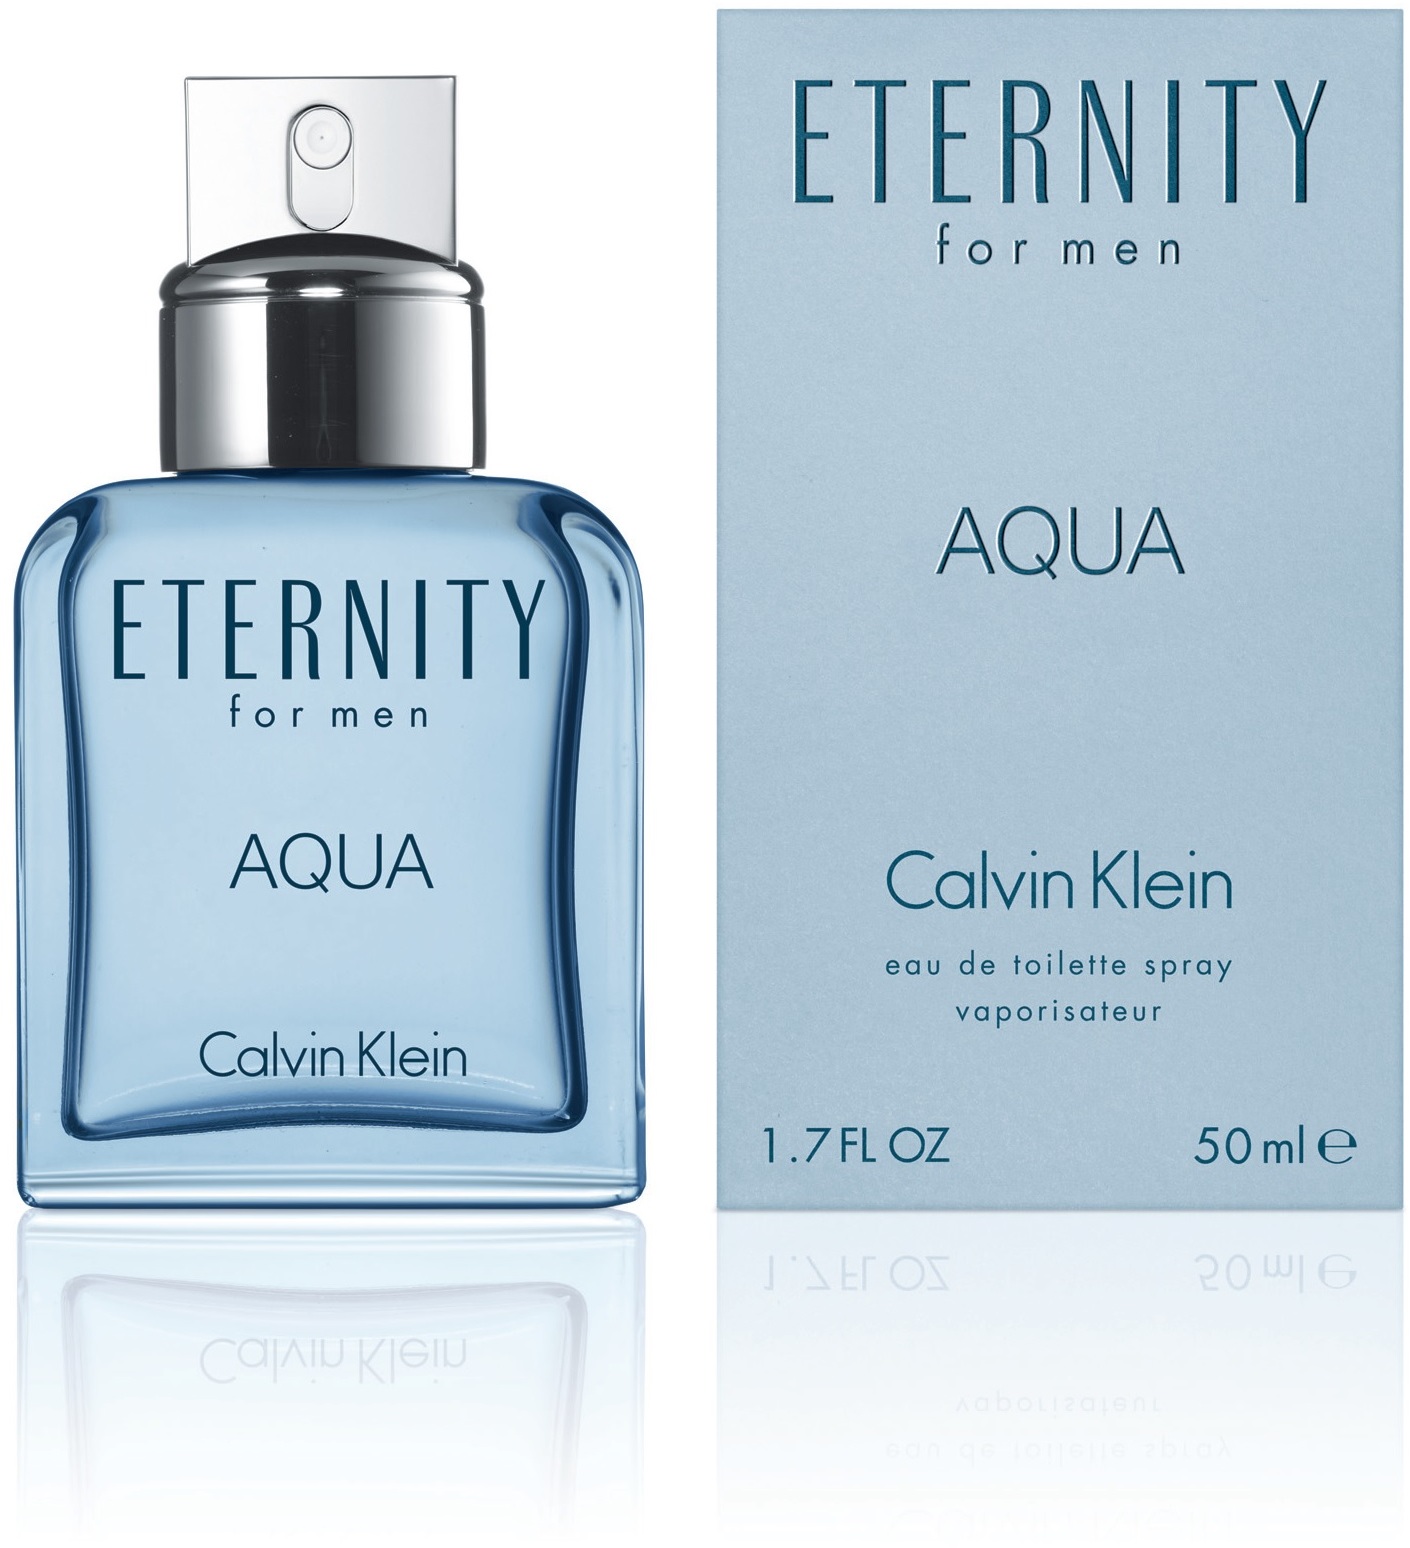 ck eternity aqua perfume